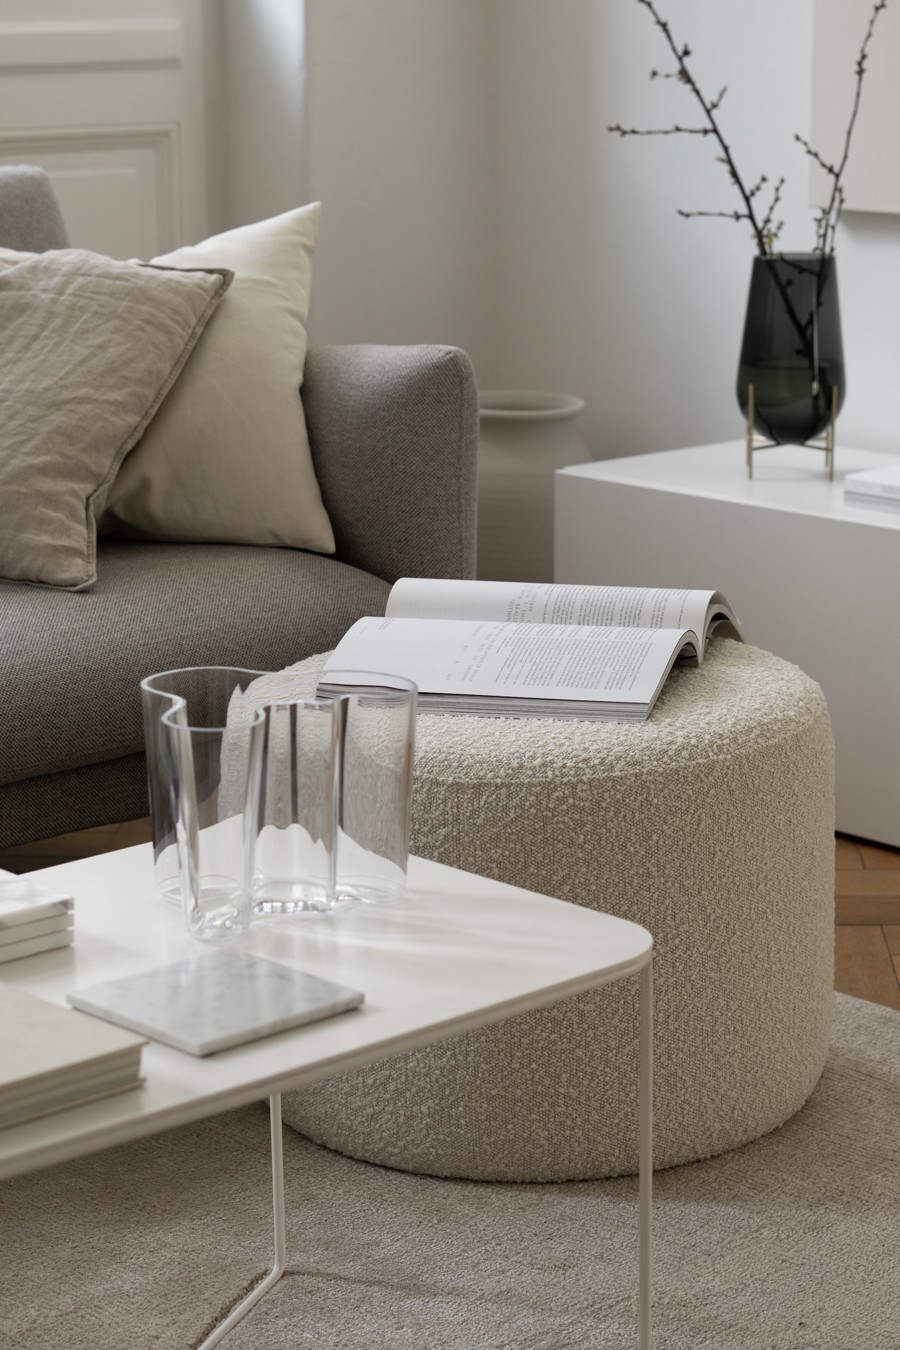 oikosterzis-boucle-fabric-lounge-furniture-beige-interior-design-aesthetic-neutral-home-cream-style-scandinavian-interiors-neutral-tones-rstella-terzi-oikos-blog-chania-furniture-y05v9.jpg